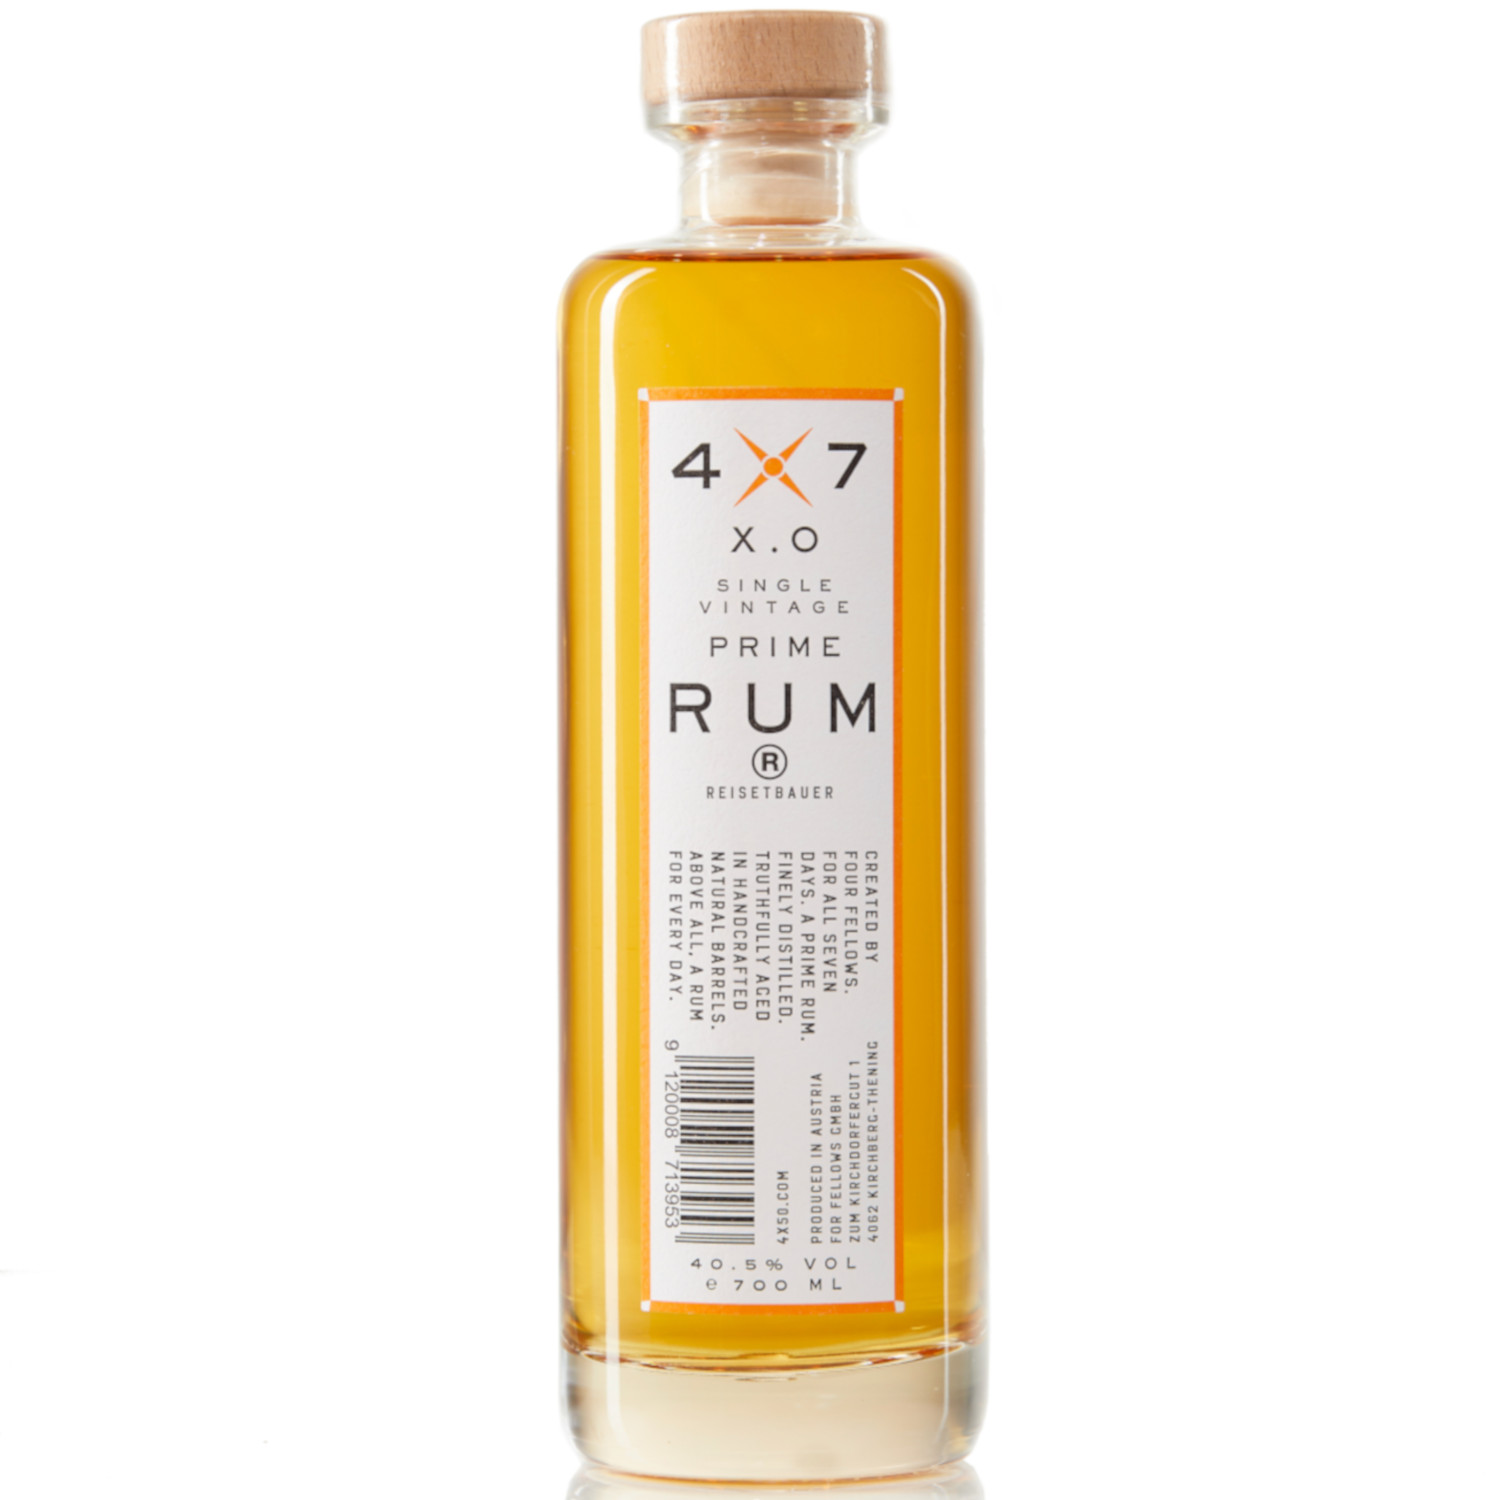 4x7 X.O Single Vintage Prime Rum by Reisetbauer 40,5%vol.